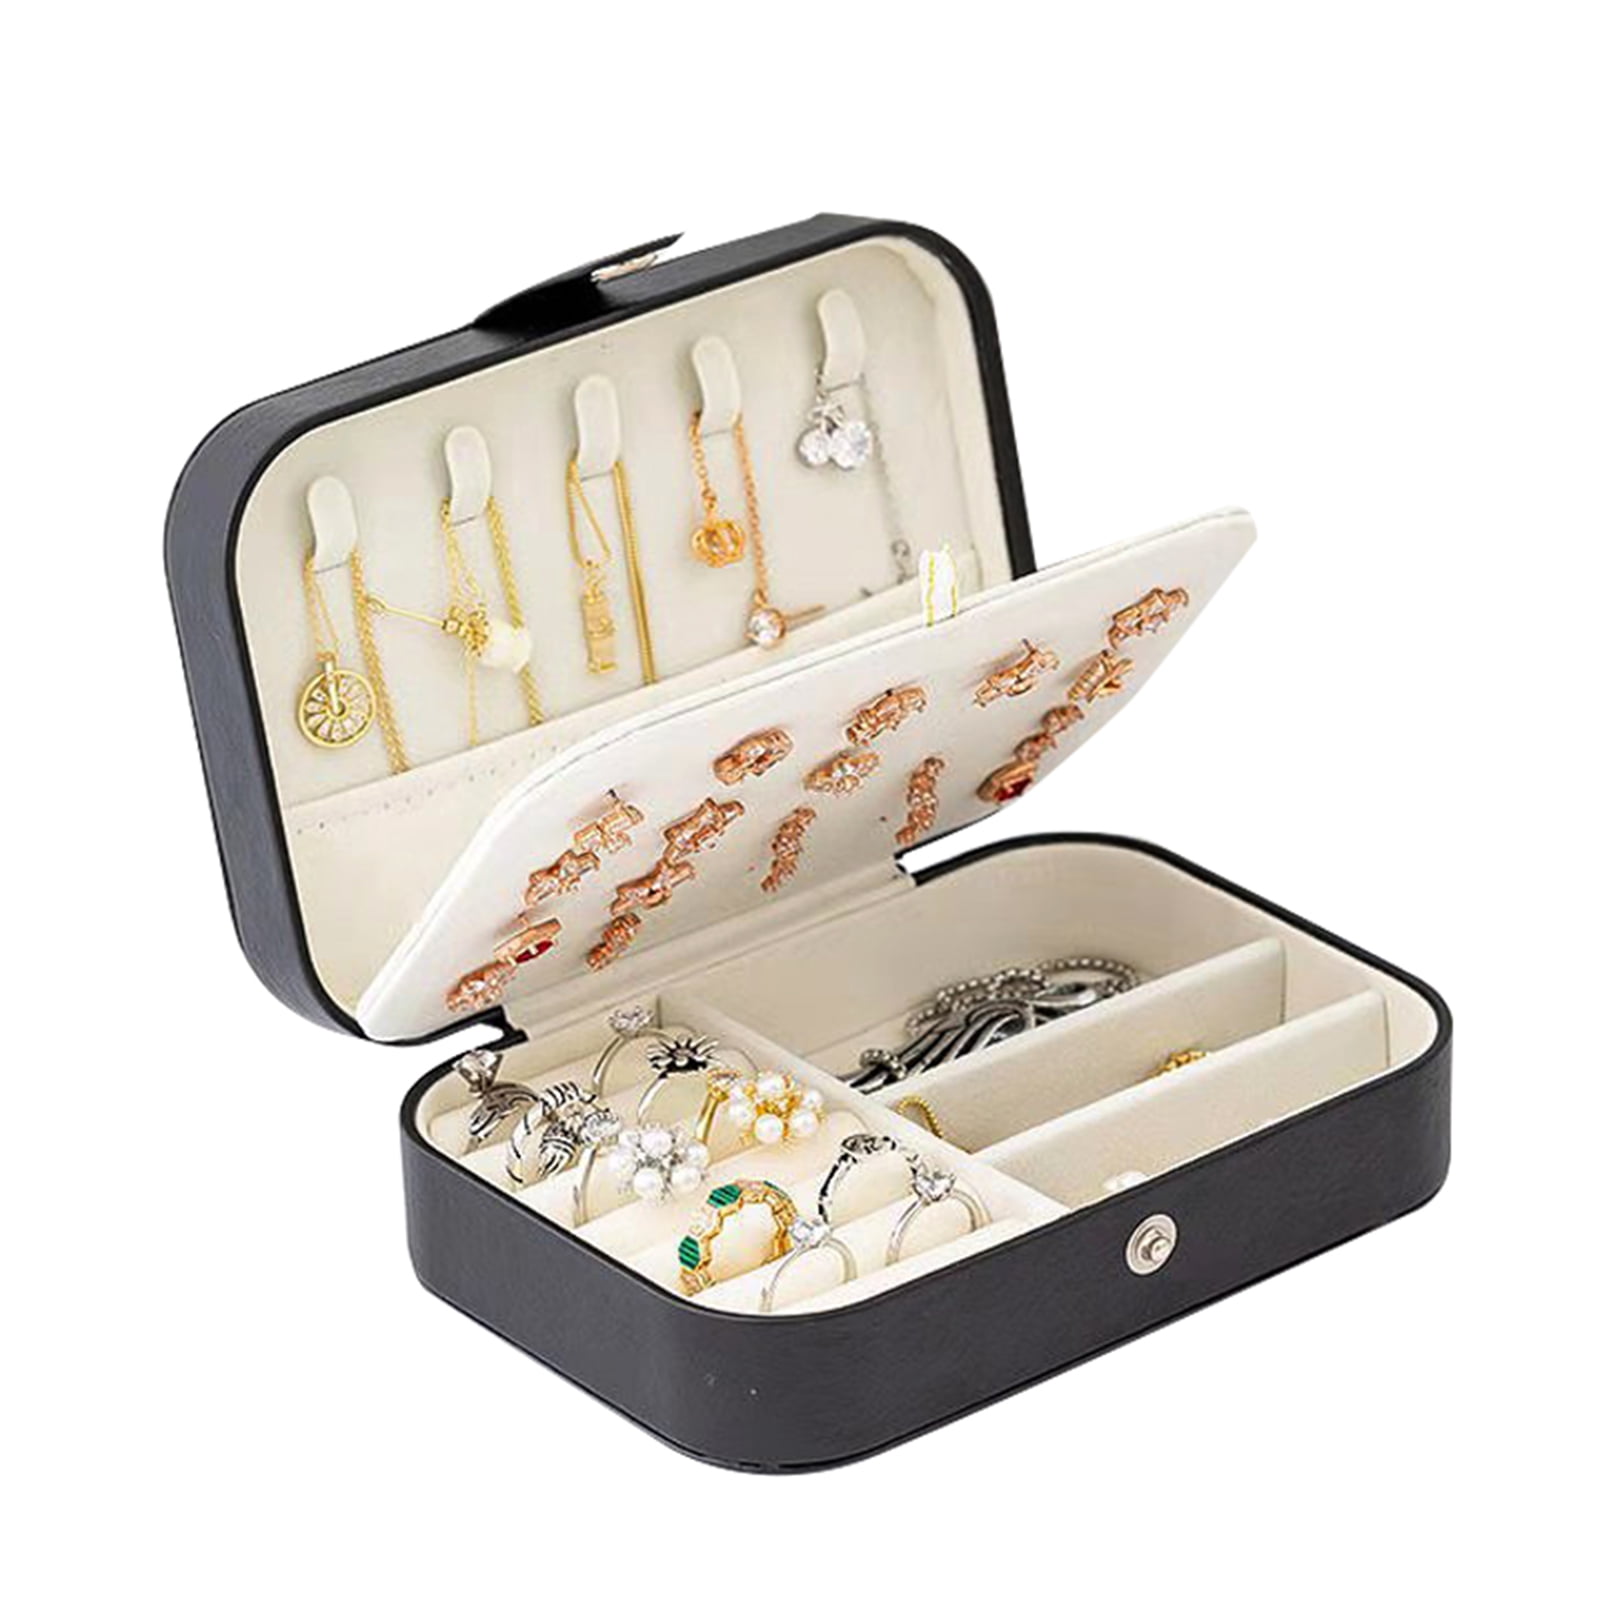 Travel Jewelry Box 3 Layers Rings Earrings Holder Case Portable Jewelry Organizer Women Girls New -